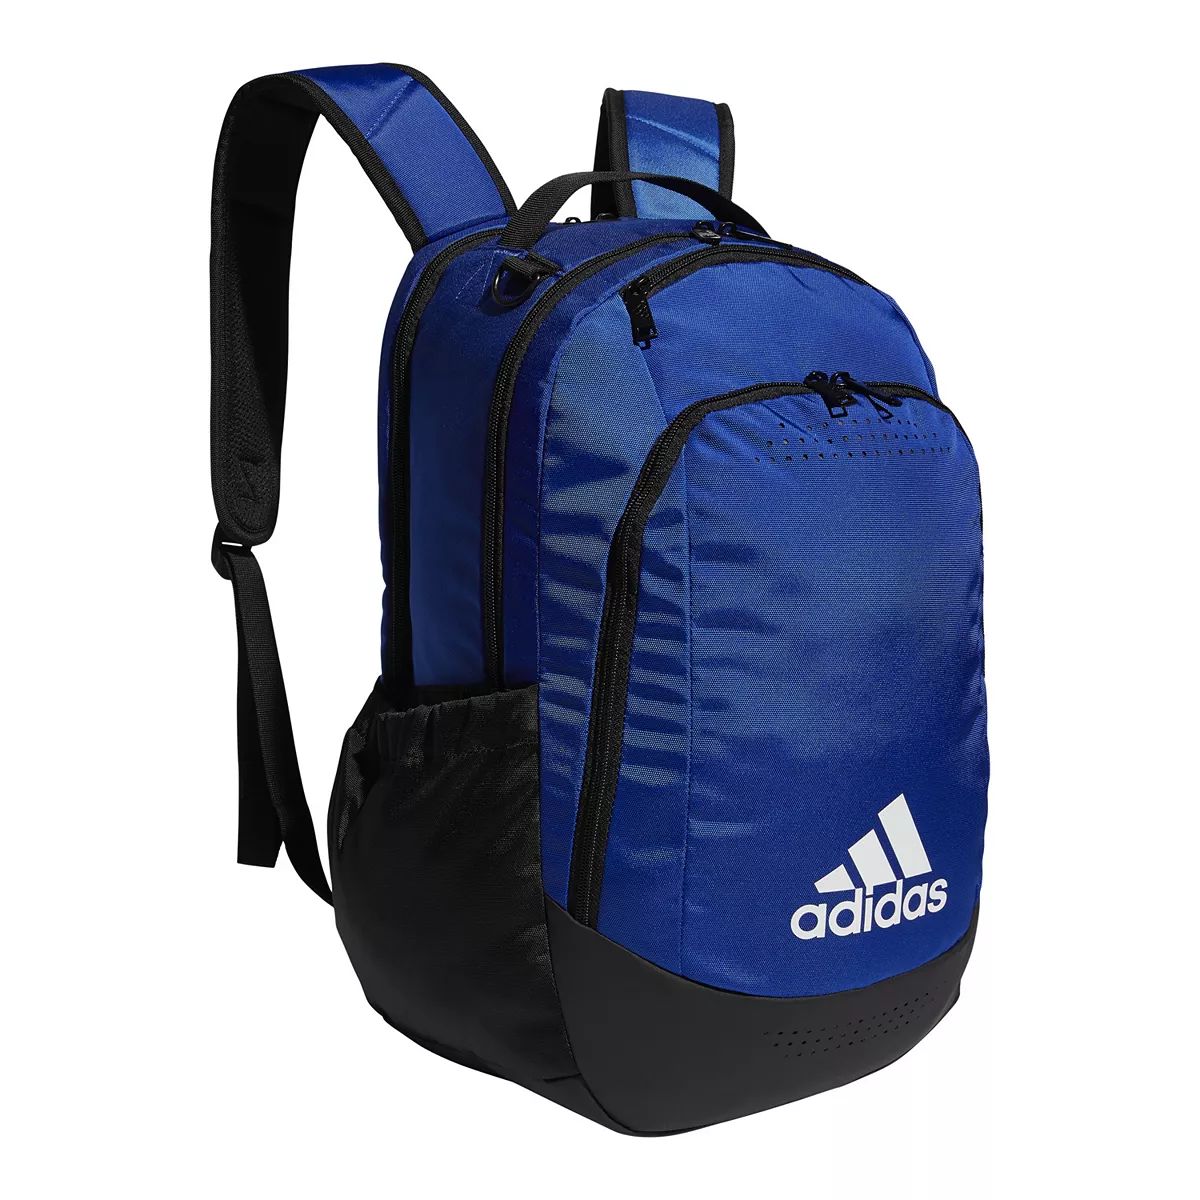 adidas Defender Backpack | Kohl's